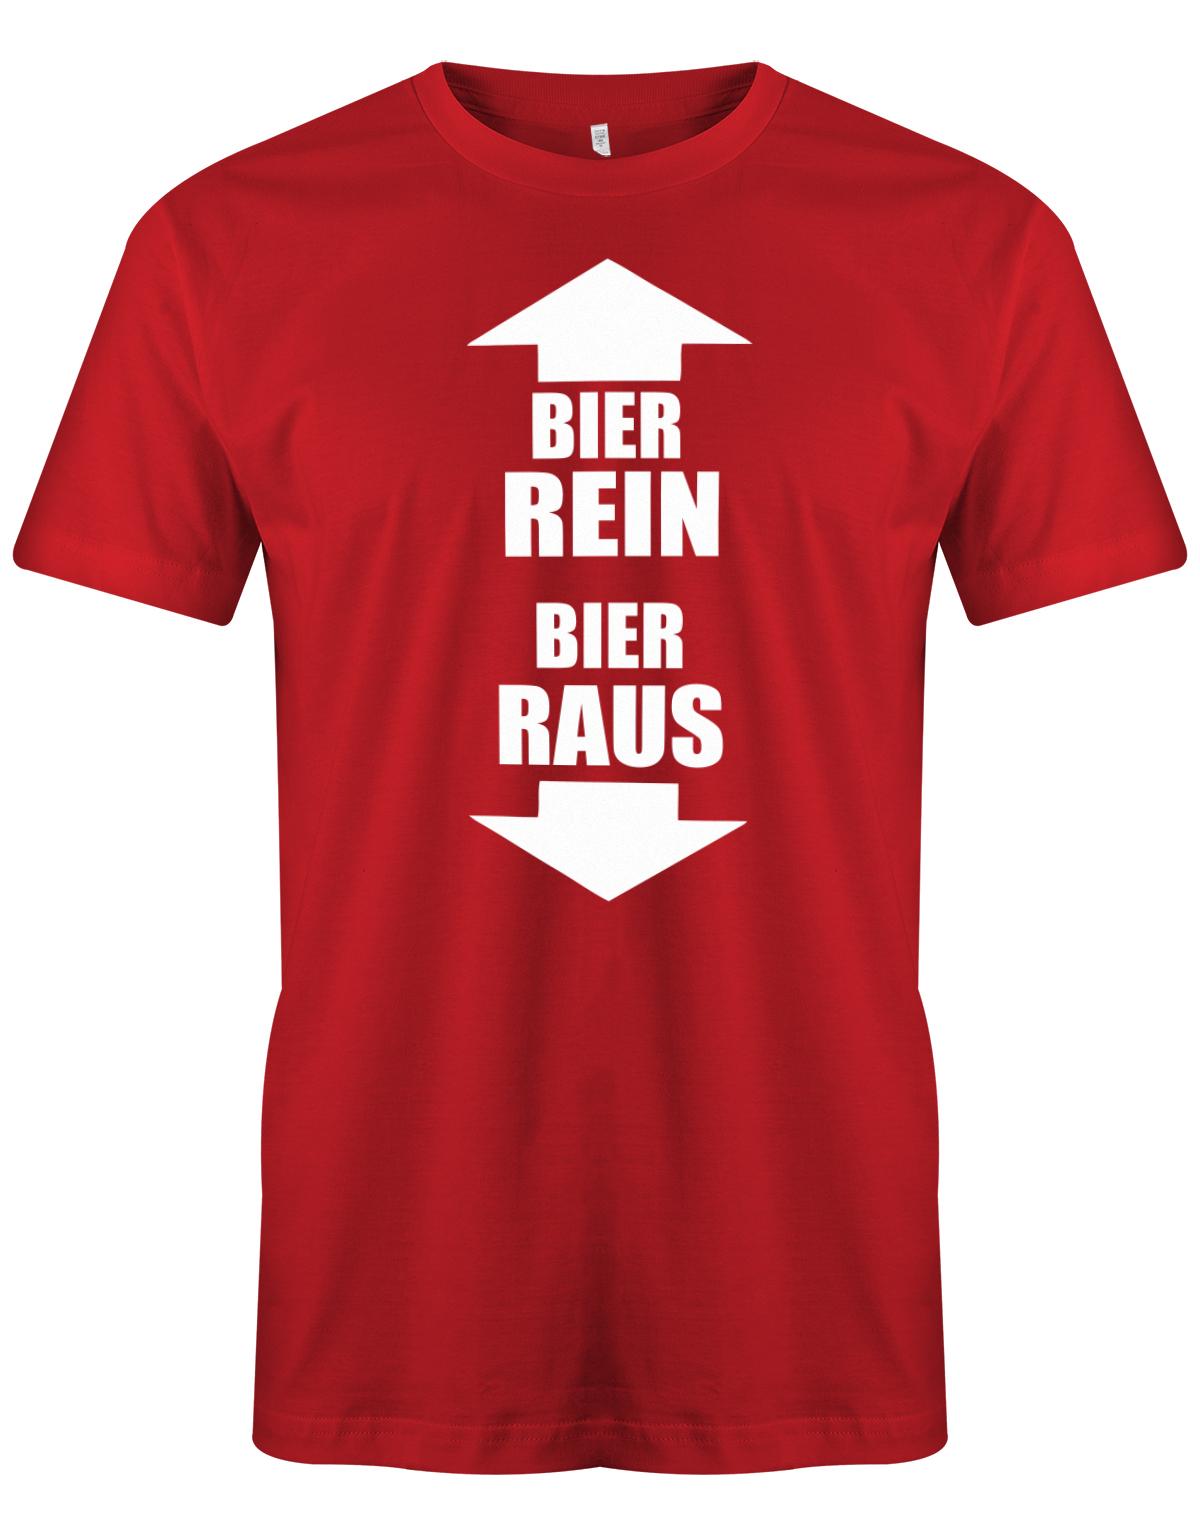 Bier-rein-Bier-raus-Bier-Shirt-Herren-Rot